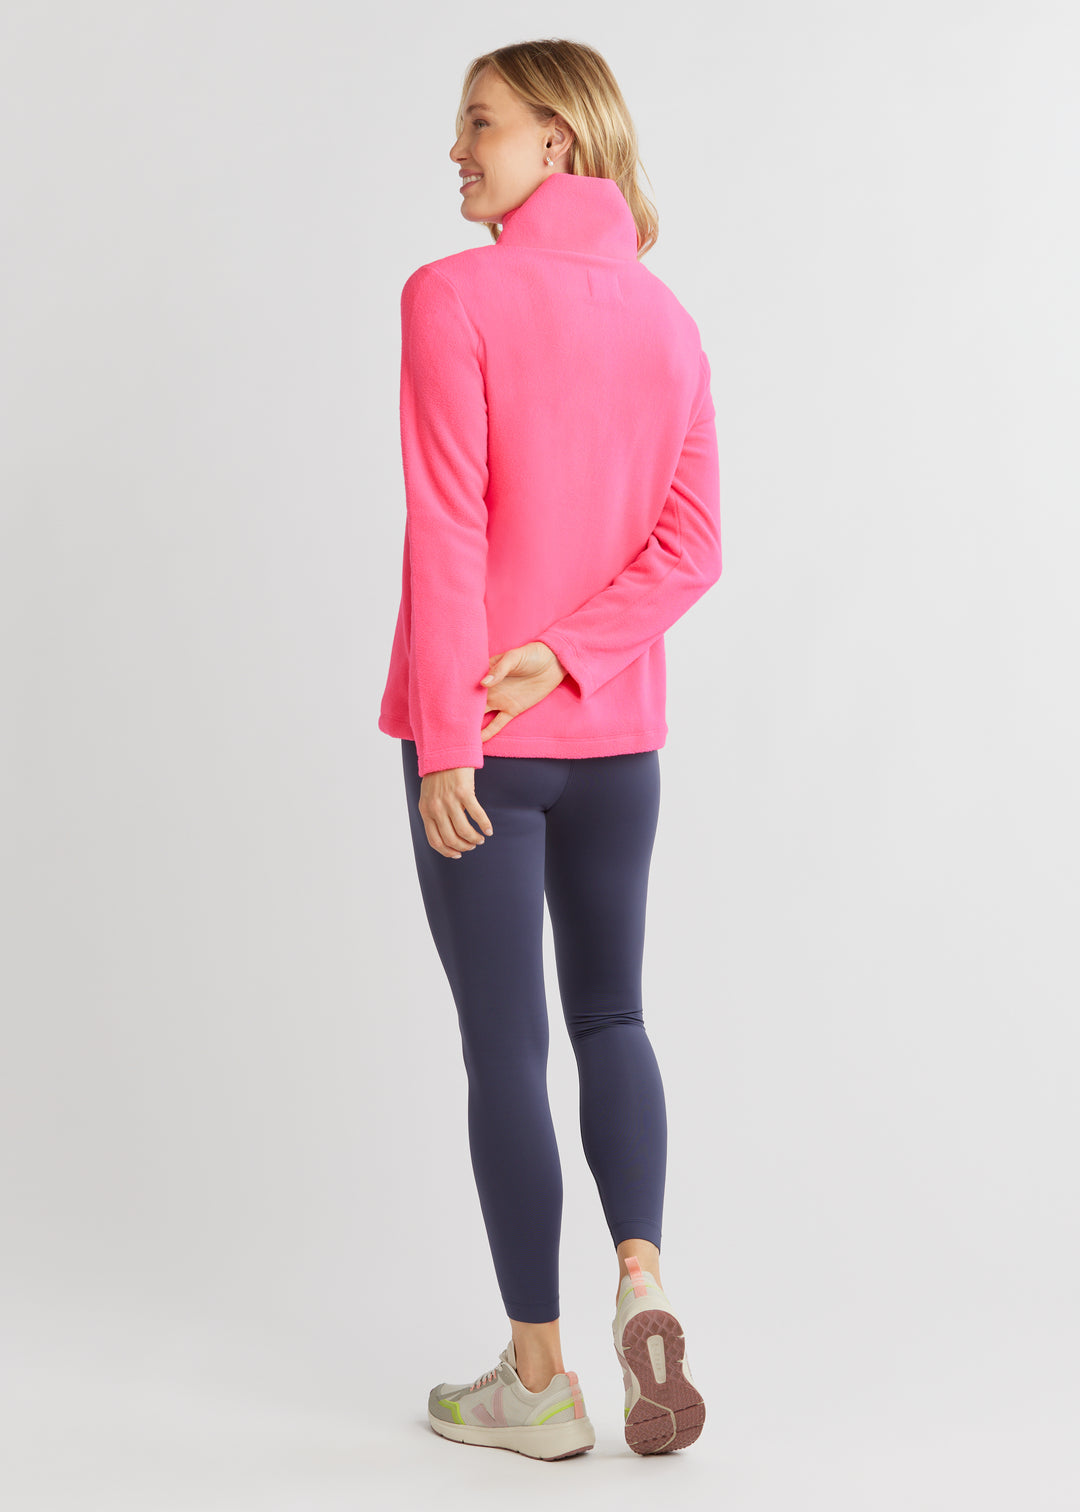 Kaki Pullover in Vello Fleece (Neon Pink)